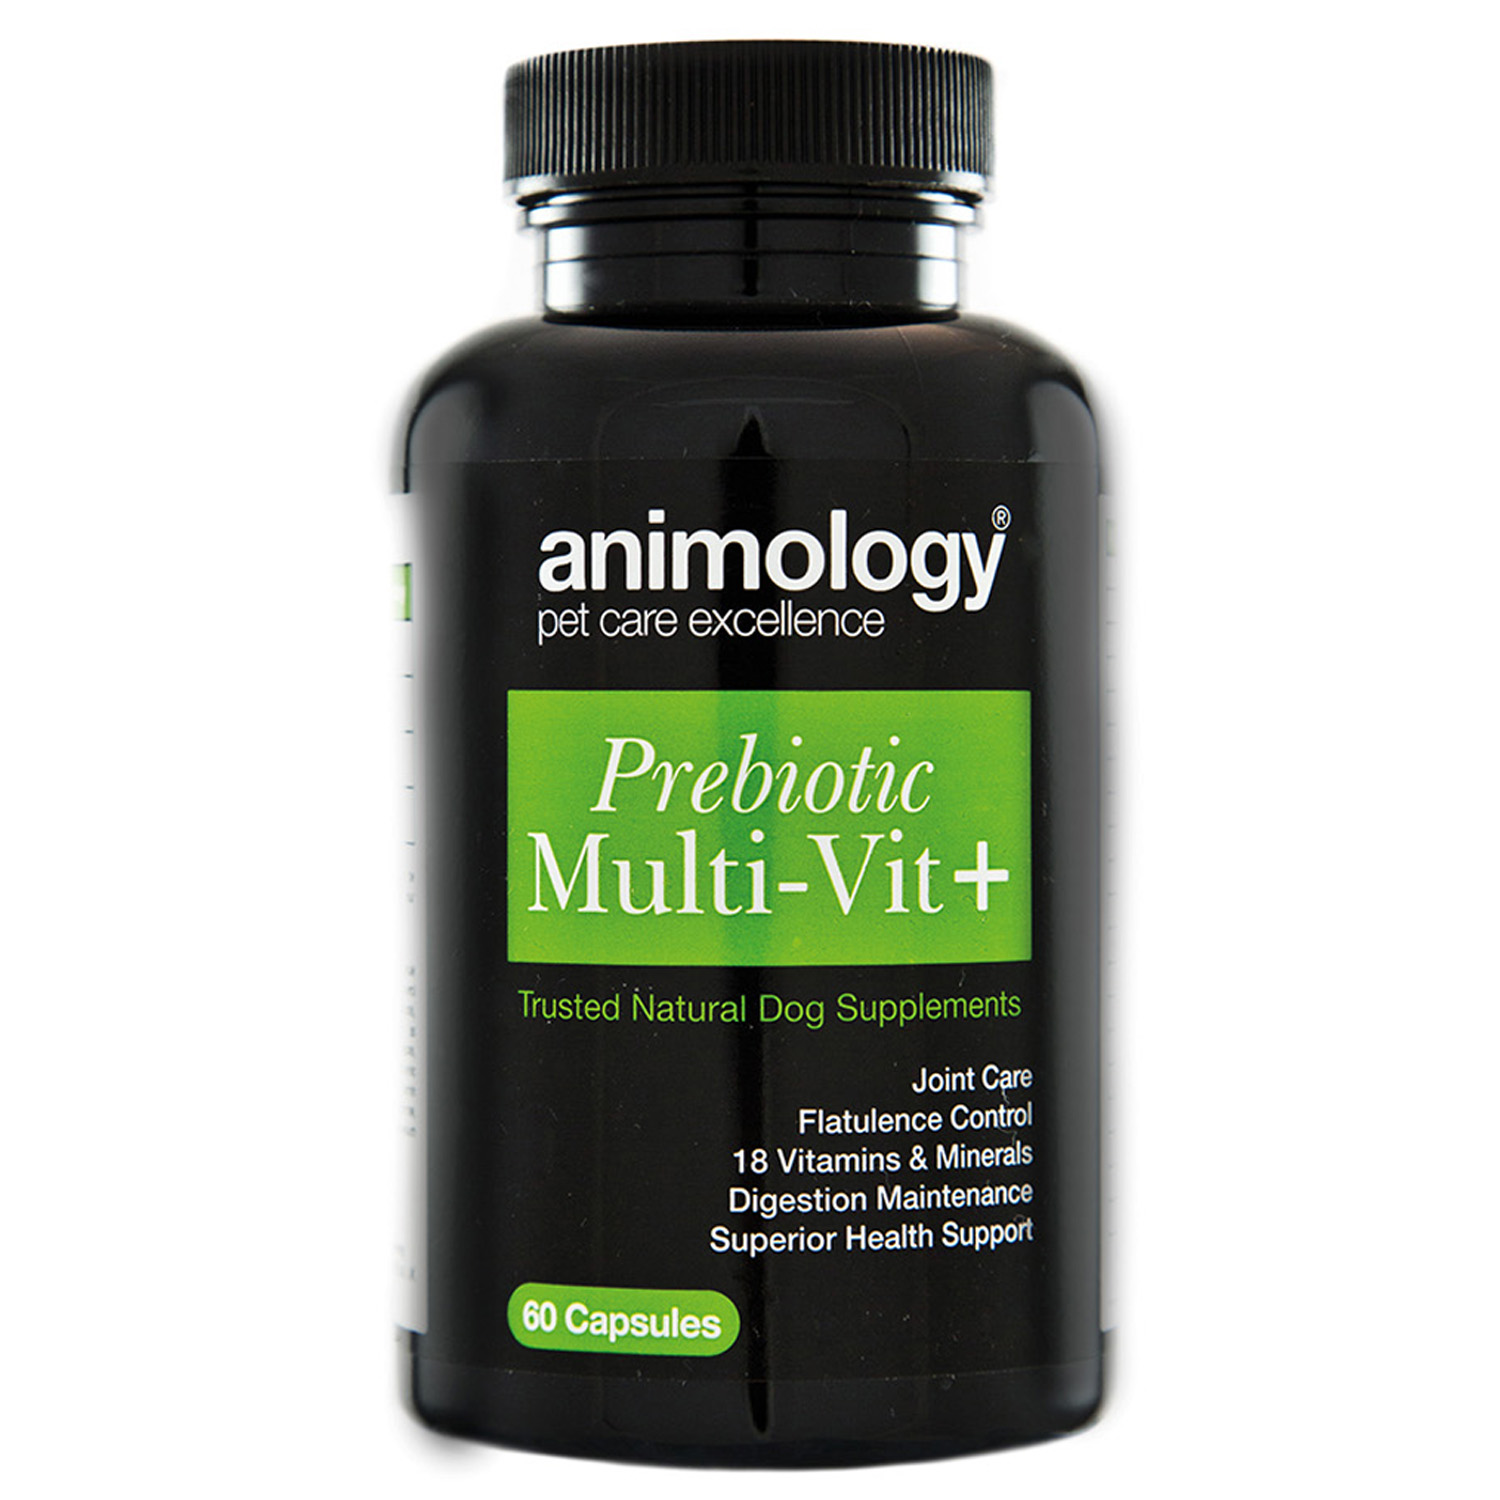 ANIMOLOGY PREBIOTIC MULTI-VIT+ CAPSULES 60 PACK